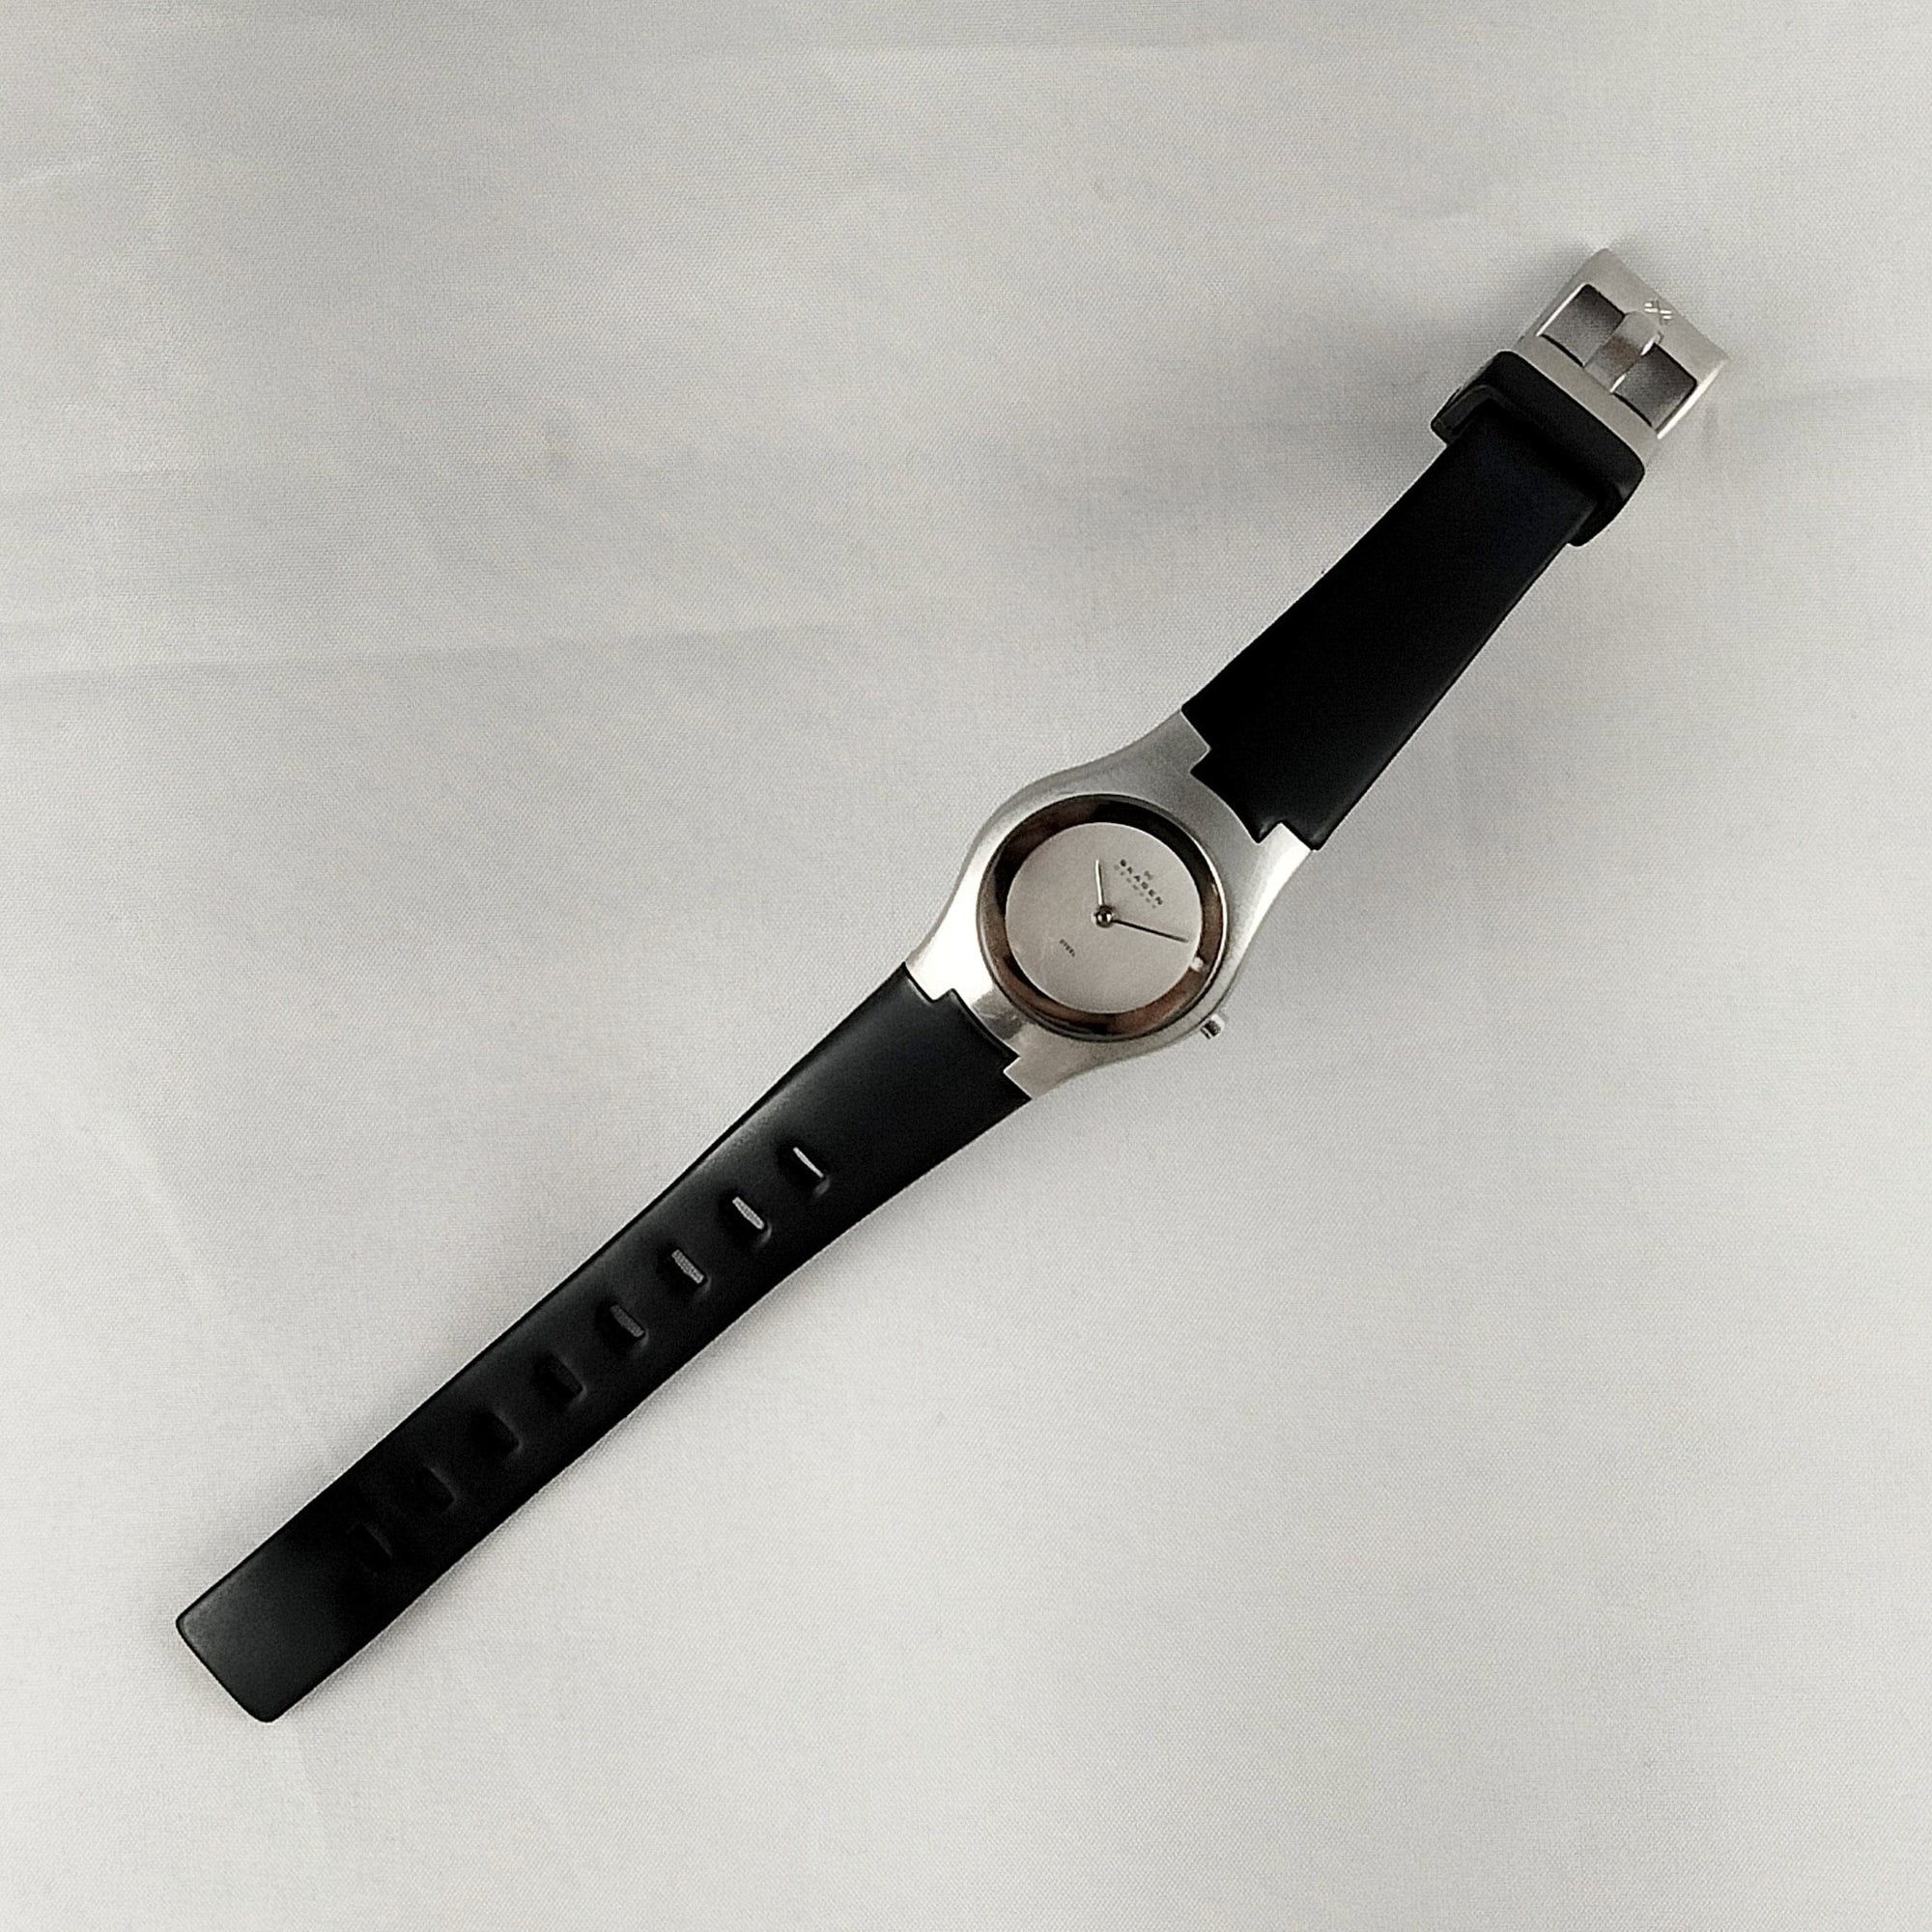 I Like Mikes Mid Century Modern Watches Skagen Stainless Steel Men's Watch, Black Rubber Strap